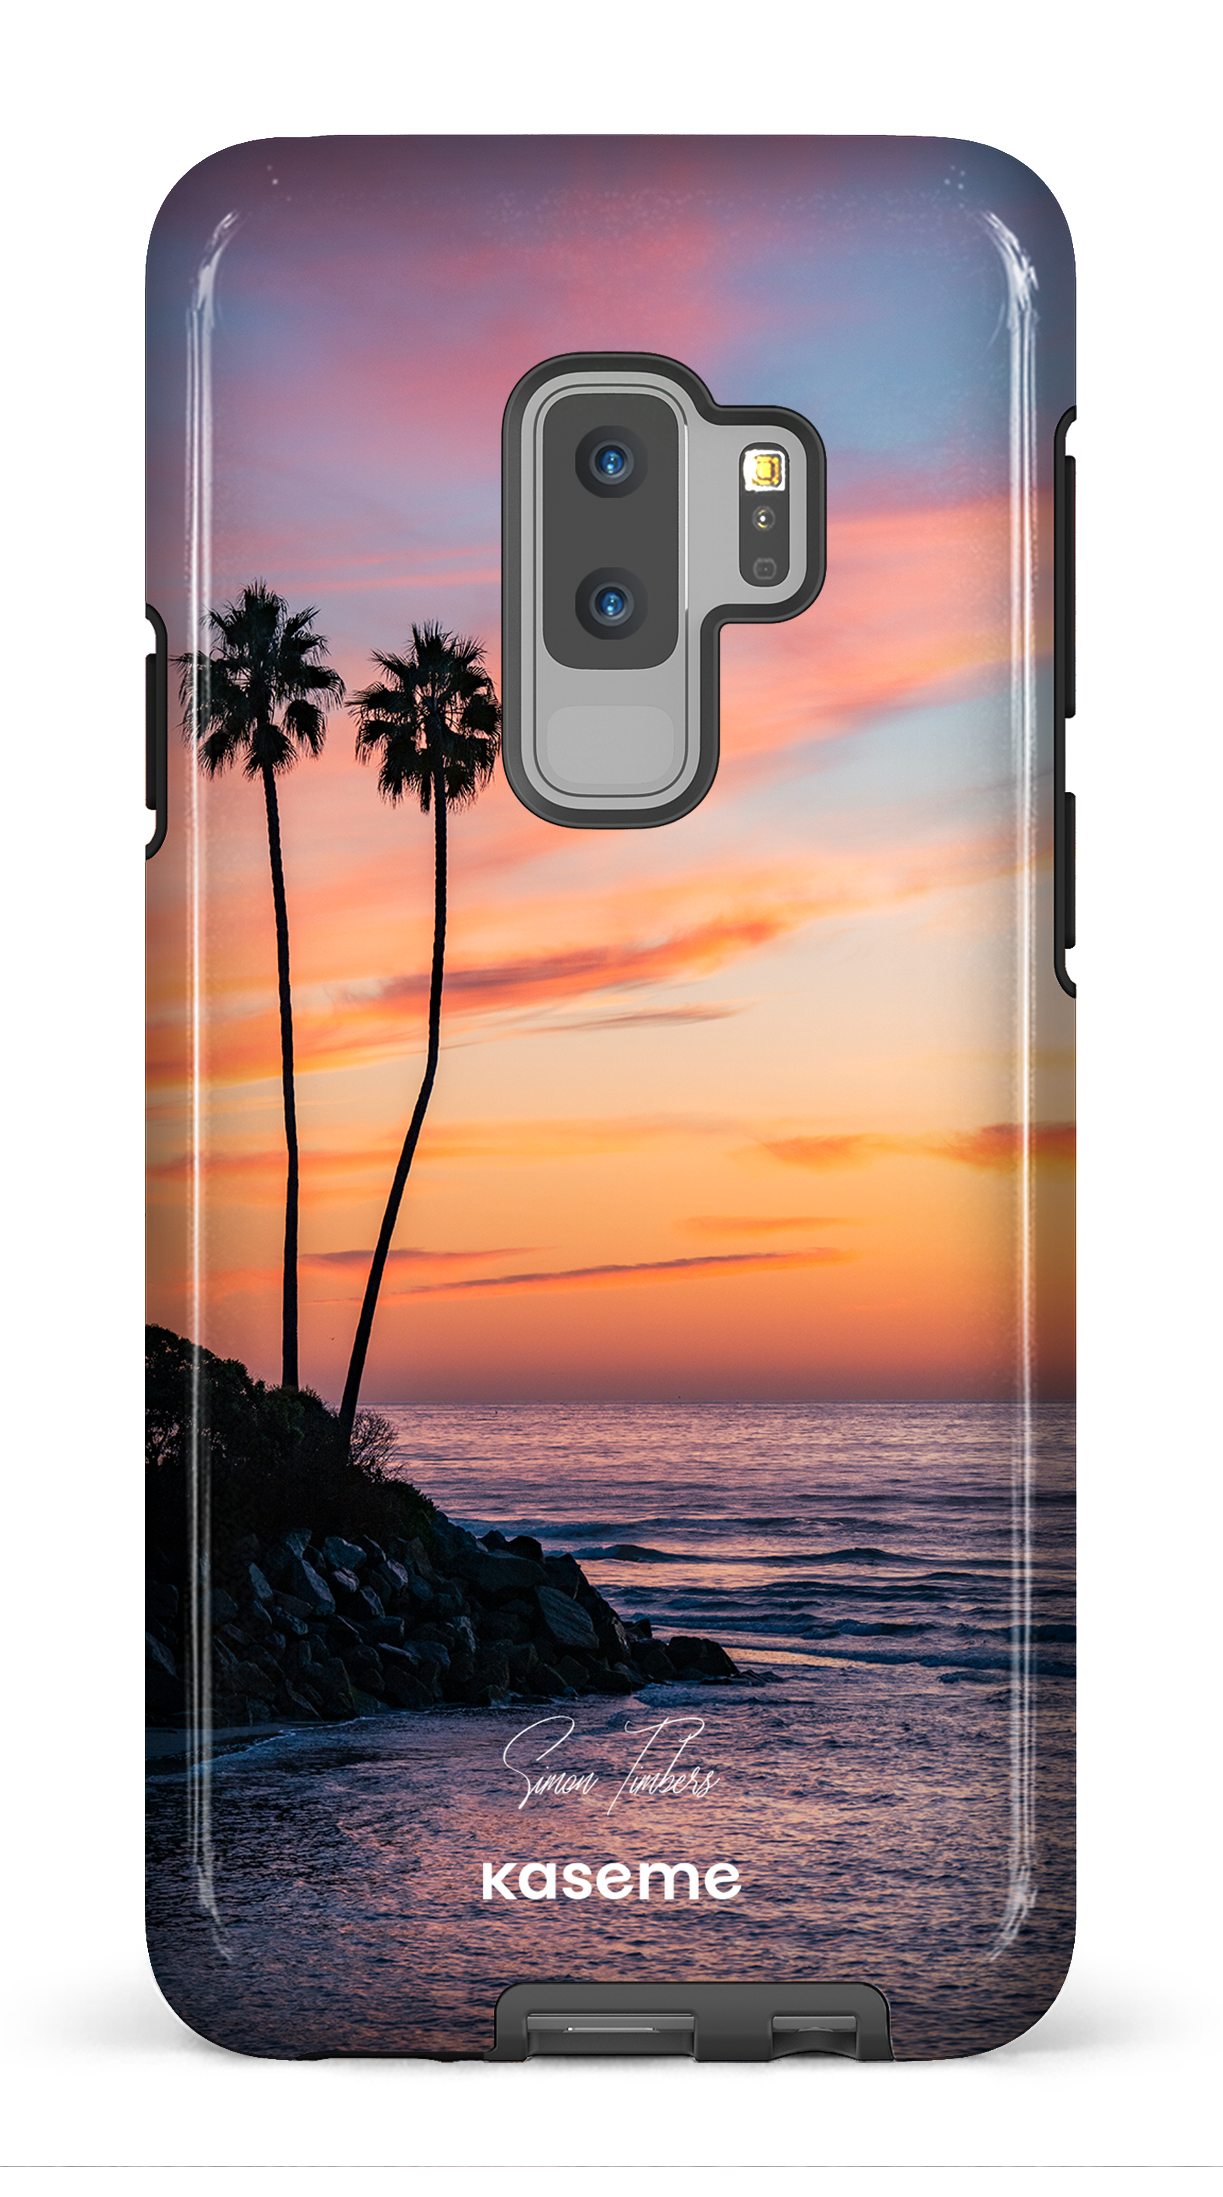 Sunset Palms by Simon Timbers - Galaxy S9 Plus